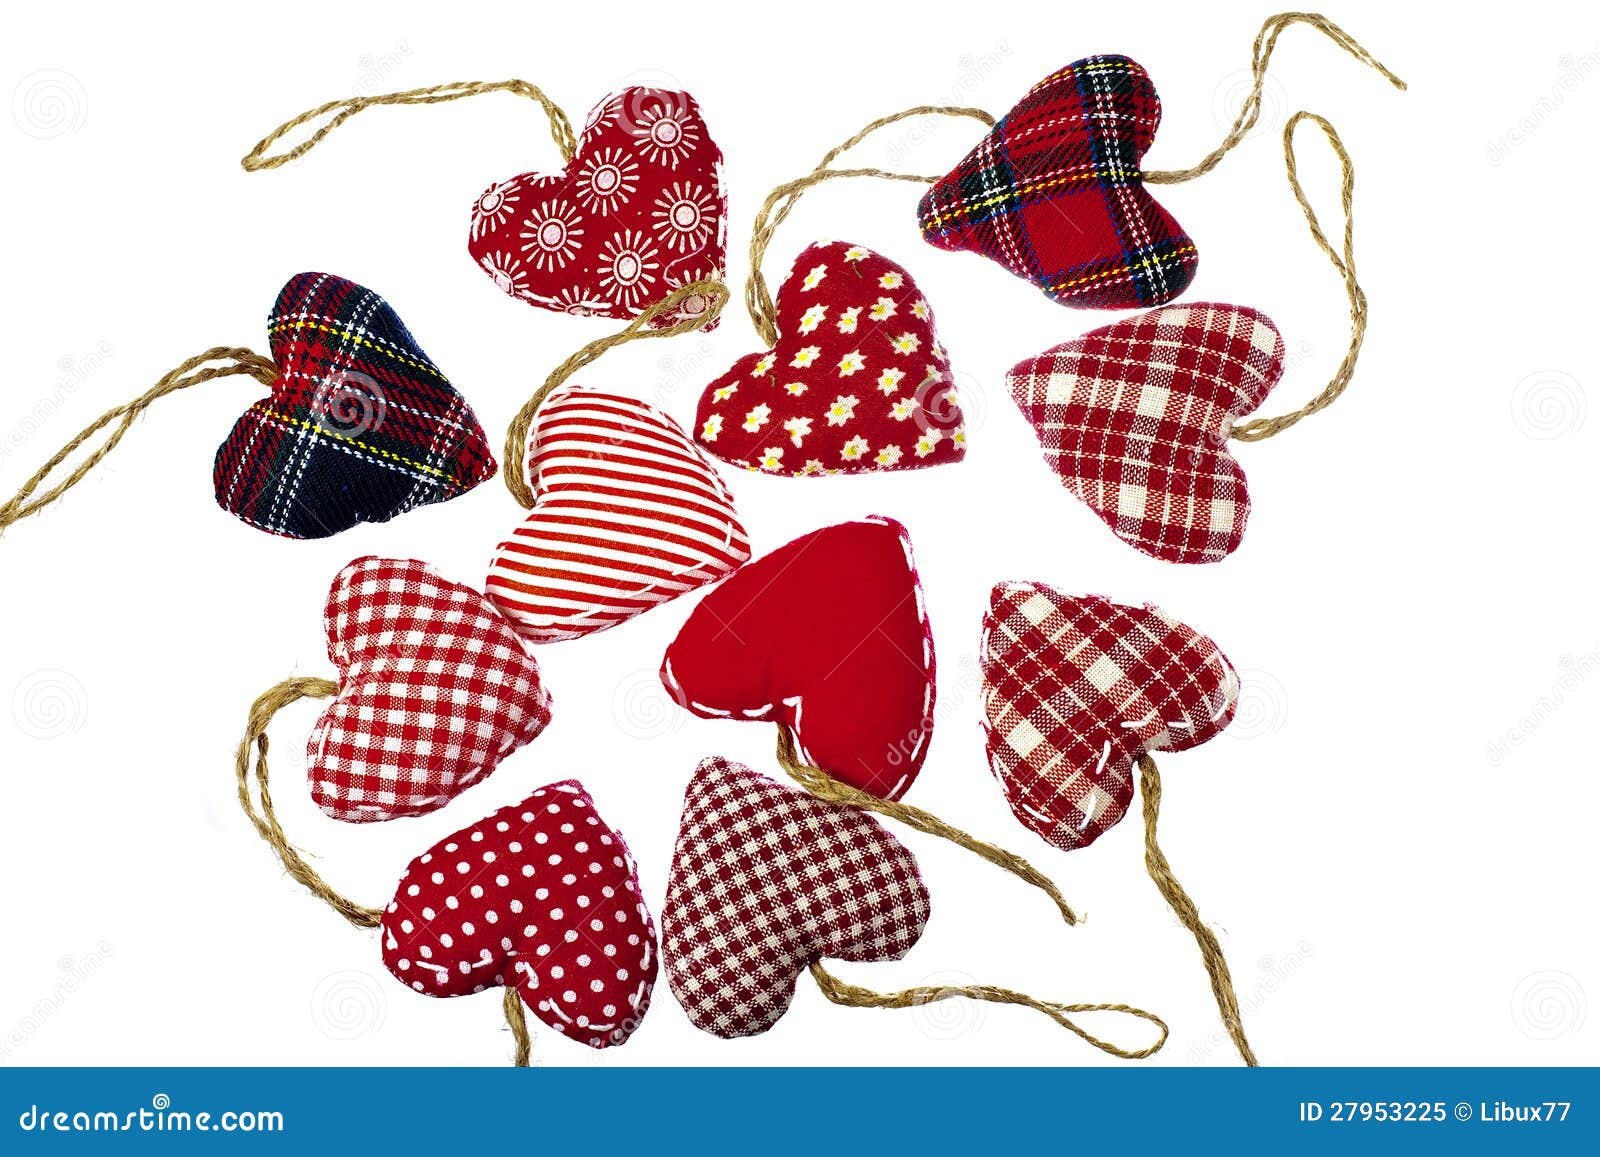 Christmas Tree Hearts Decorations Royalty Free Stock Photo - Image ...